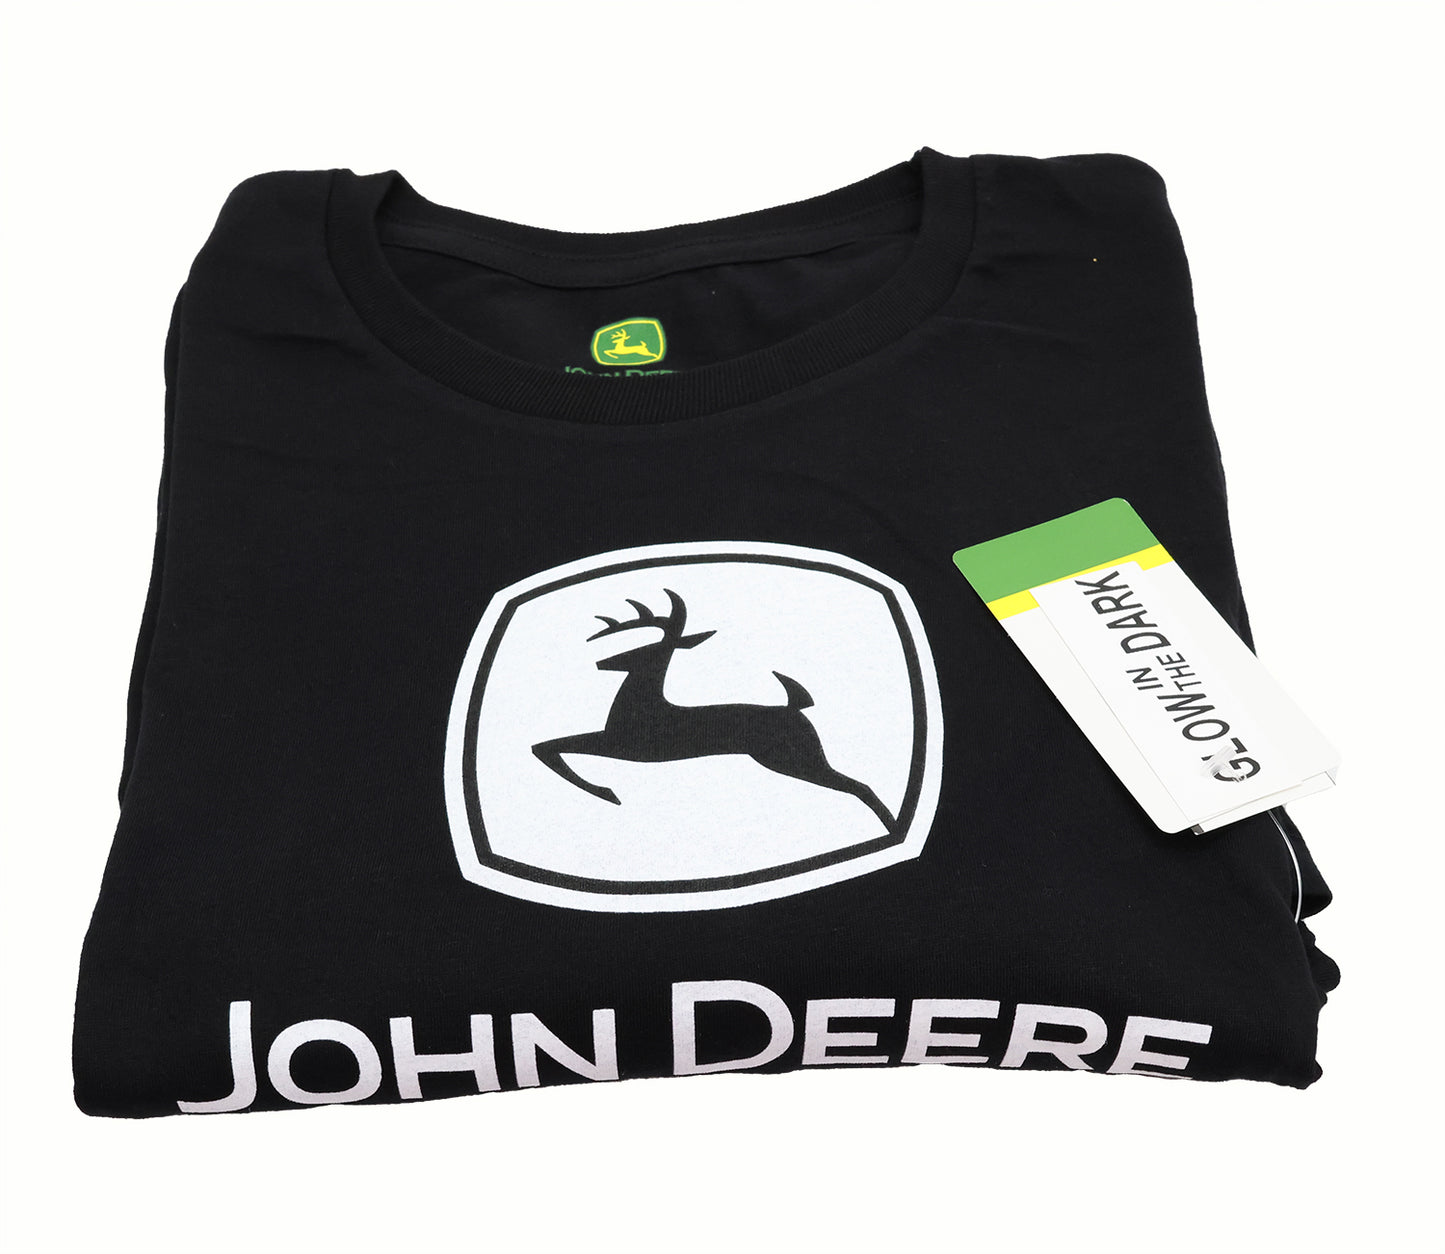 John Deere Men's (SIZE 2X) Black Glow in the Dark T-Shirt - LP84680